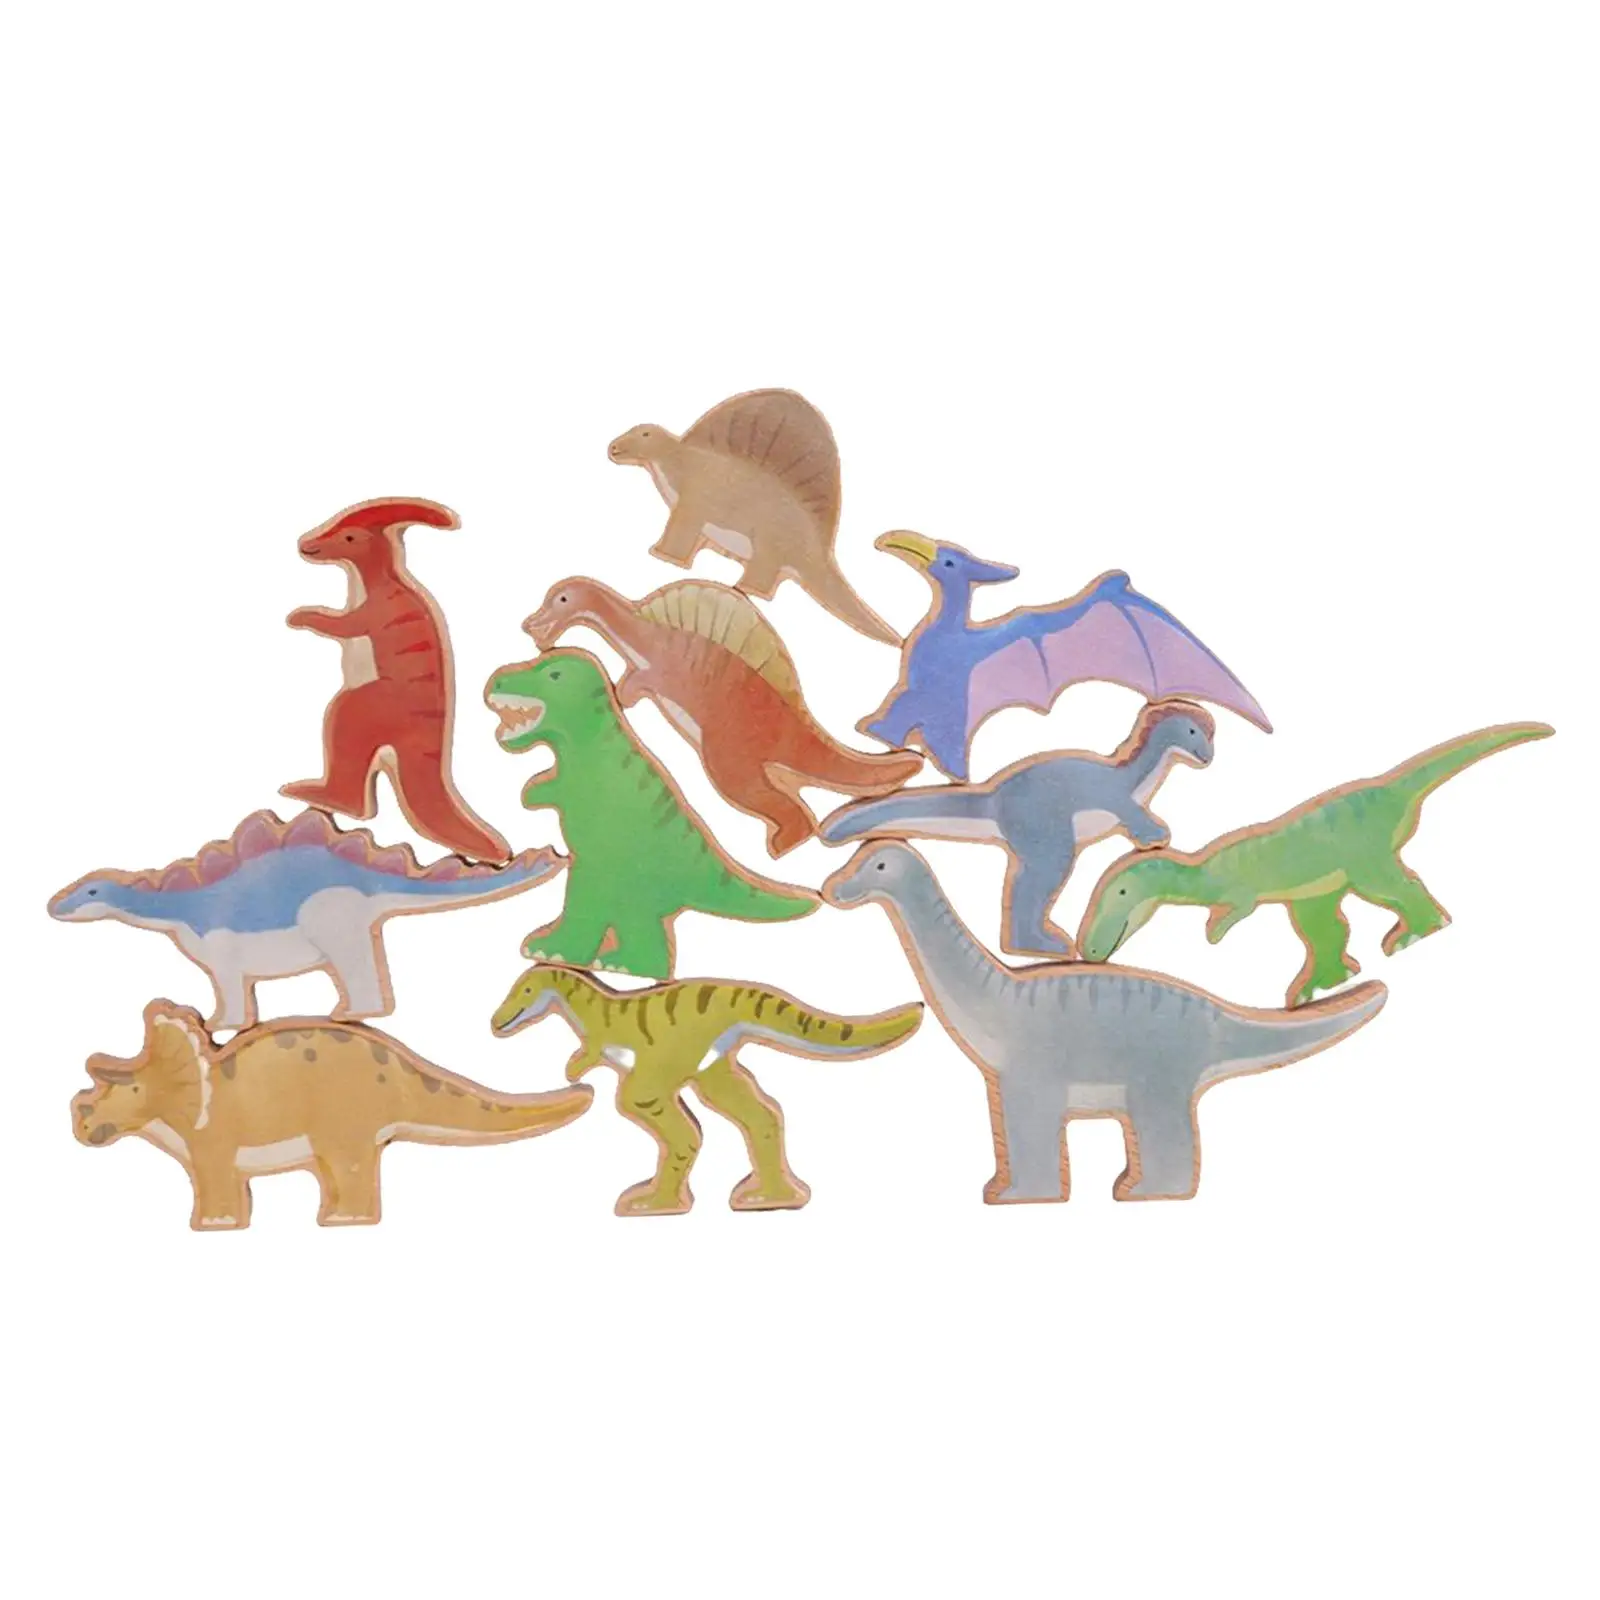 Montessori Wooden Blocks Dinosaur Toys Learning Toys Puzzle Toys Educational Toys Brain Development for Kids Children Gifts